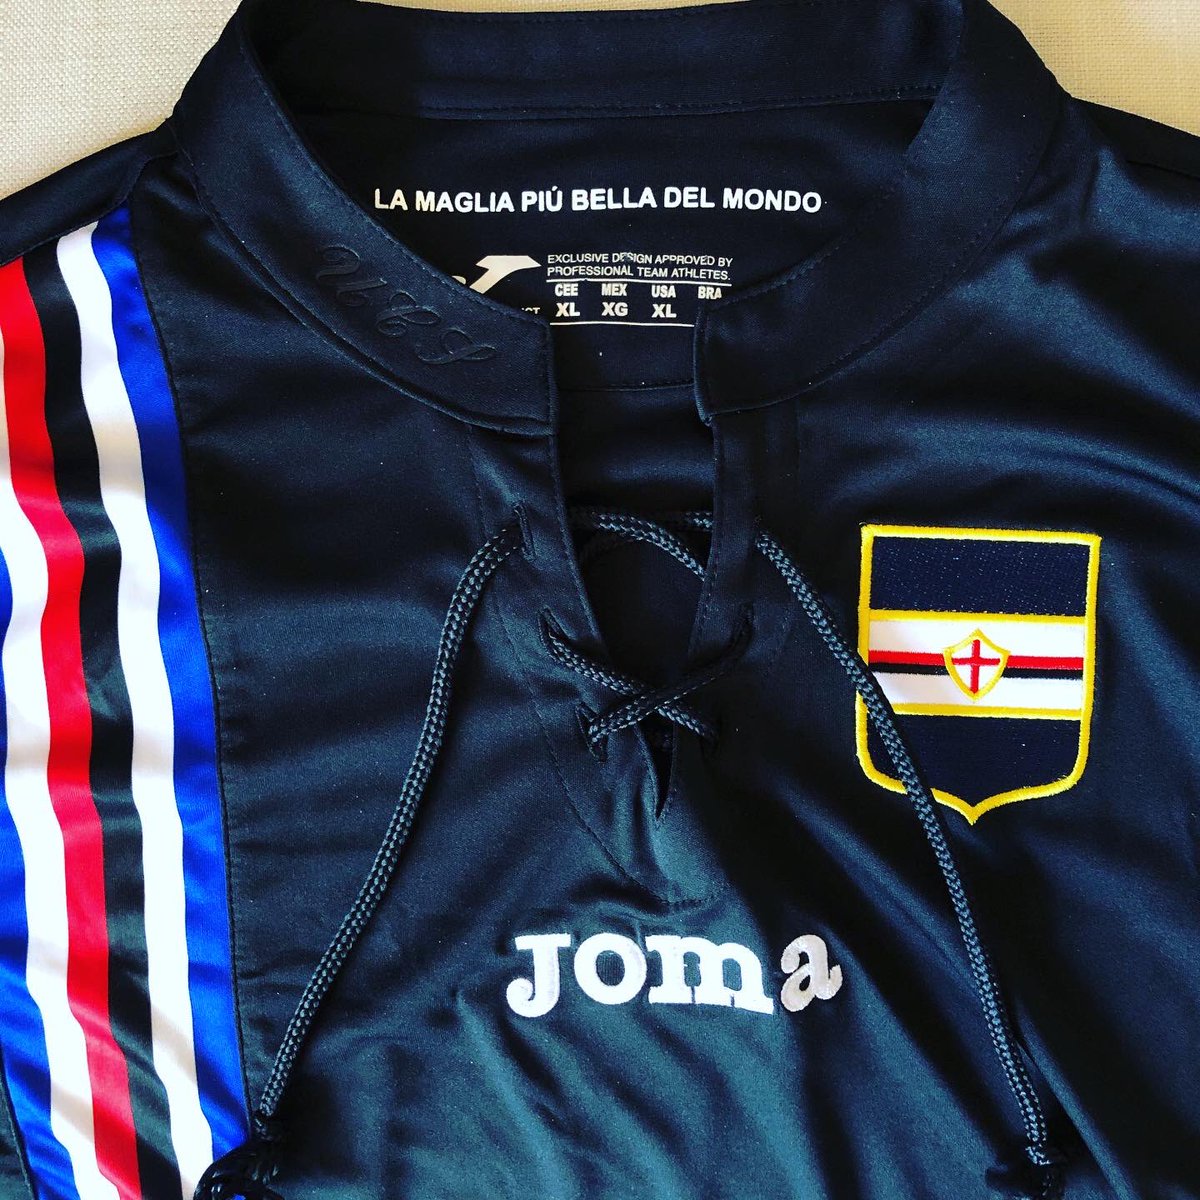 . @sampdoria_en Third Kit, 2018/19JomaThe Most Beautiful Shirt In The World. Though not in its classic form. This one was one of my favourite shirts last season. #Sampdoria  #Blucerchiati  #SerieAShirts  #ClassicSerieA  #ClassicFootballShirt  #FootballShirtCollection